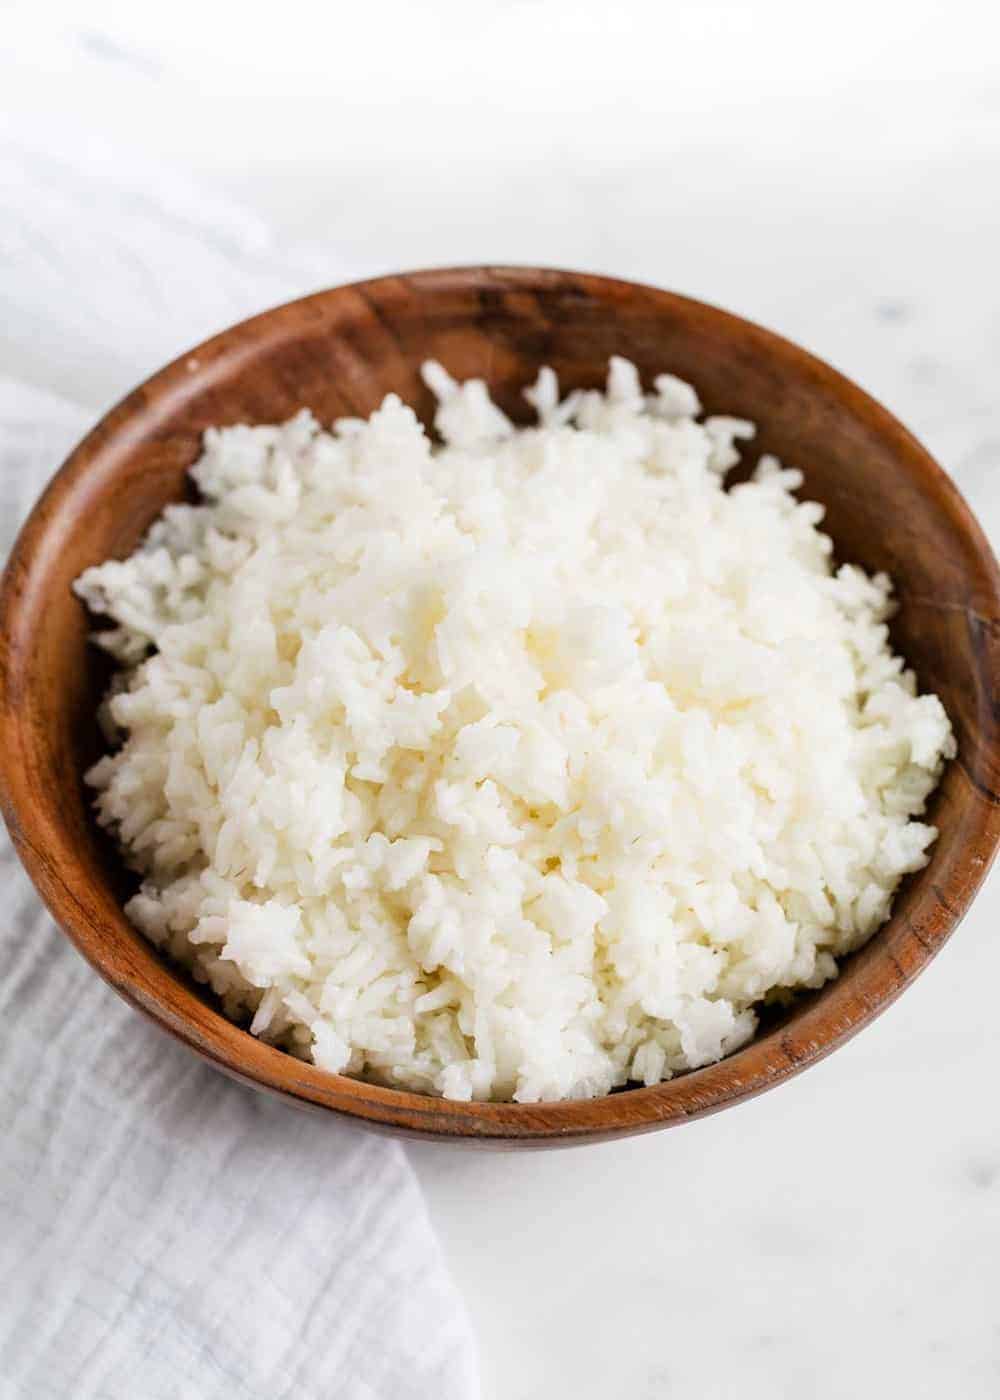 How to Make White Rice